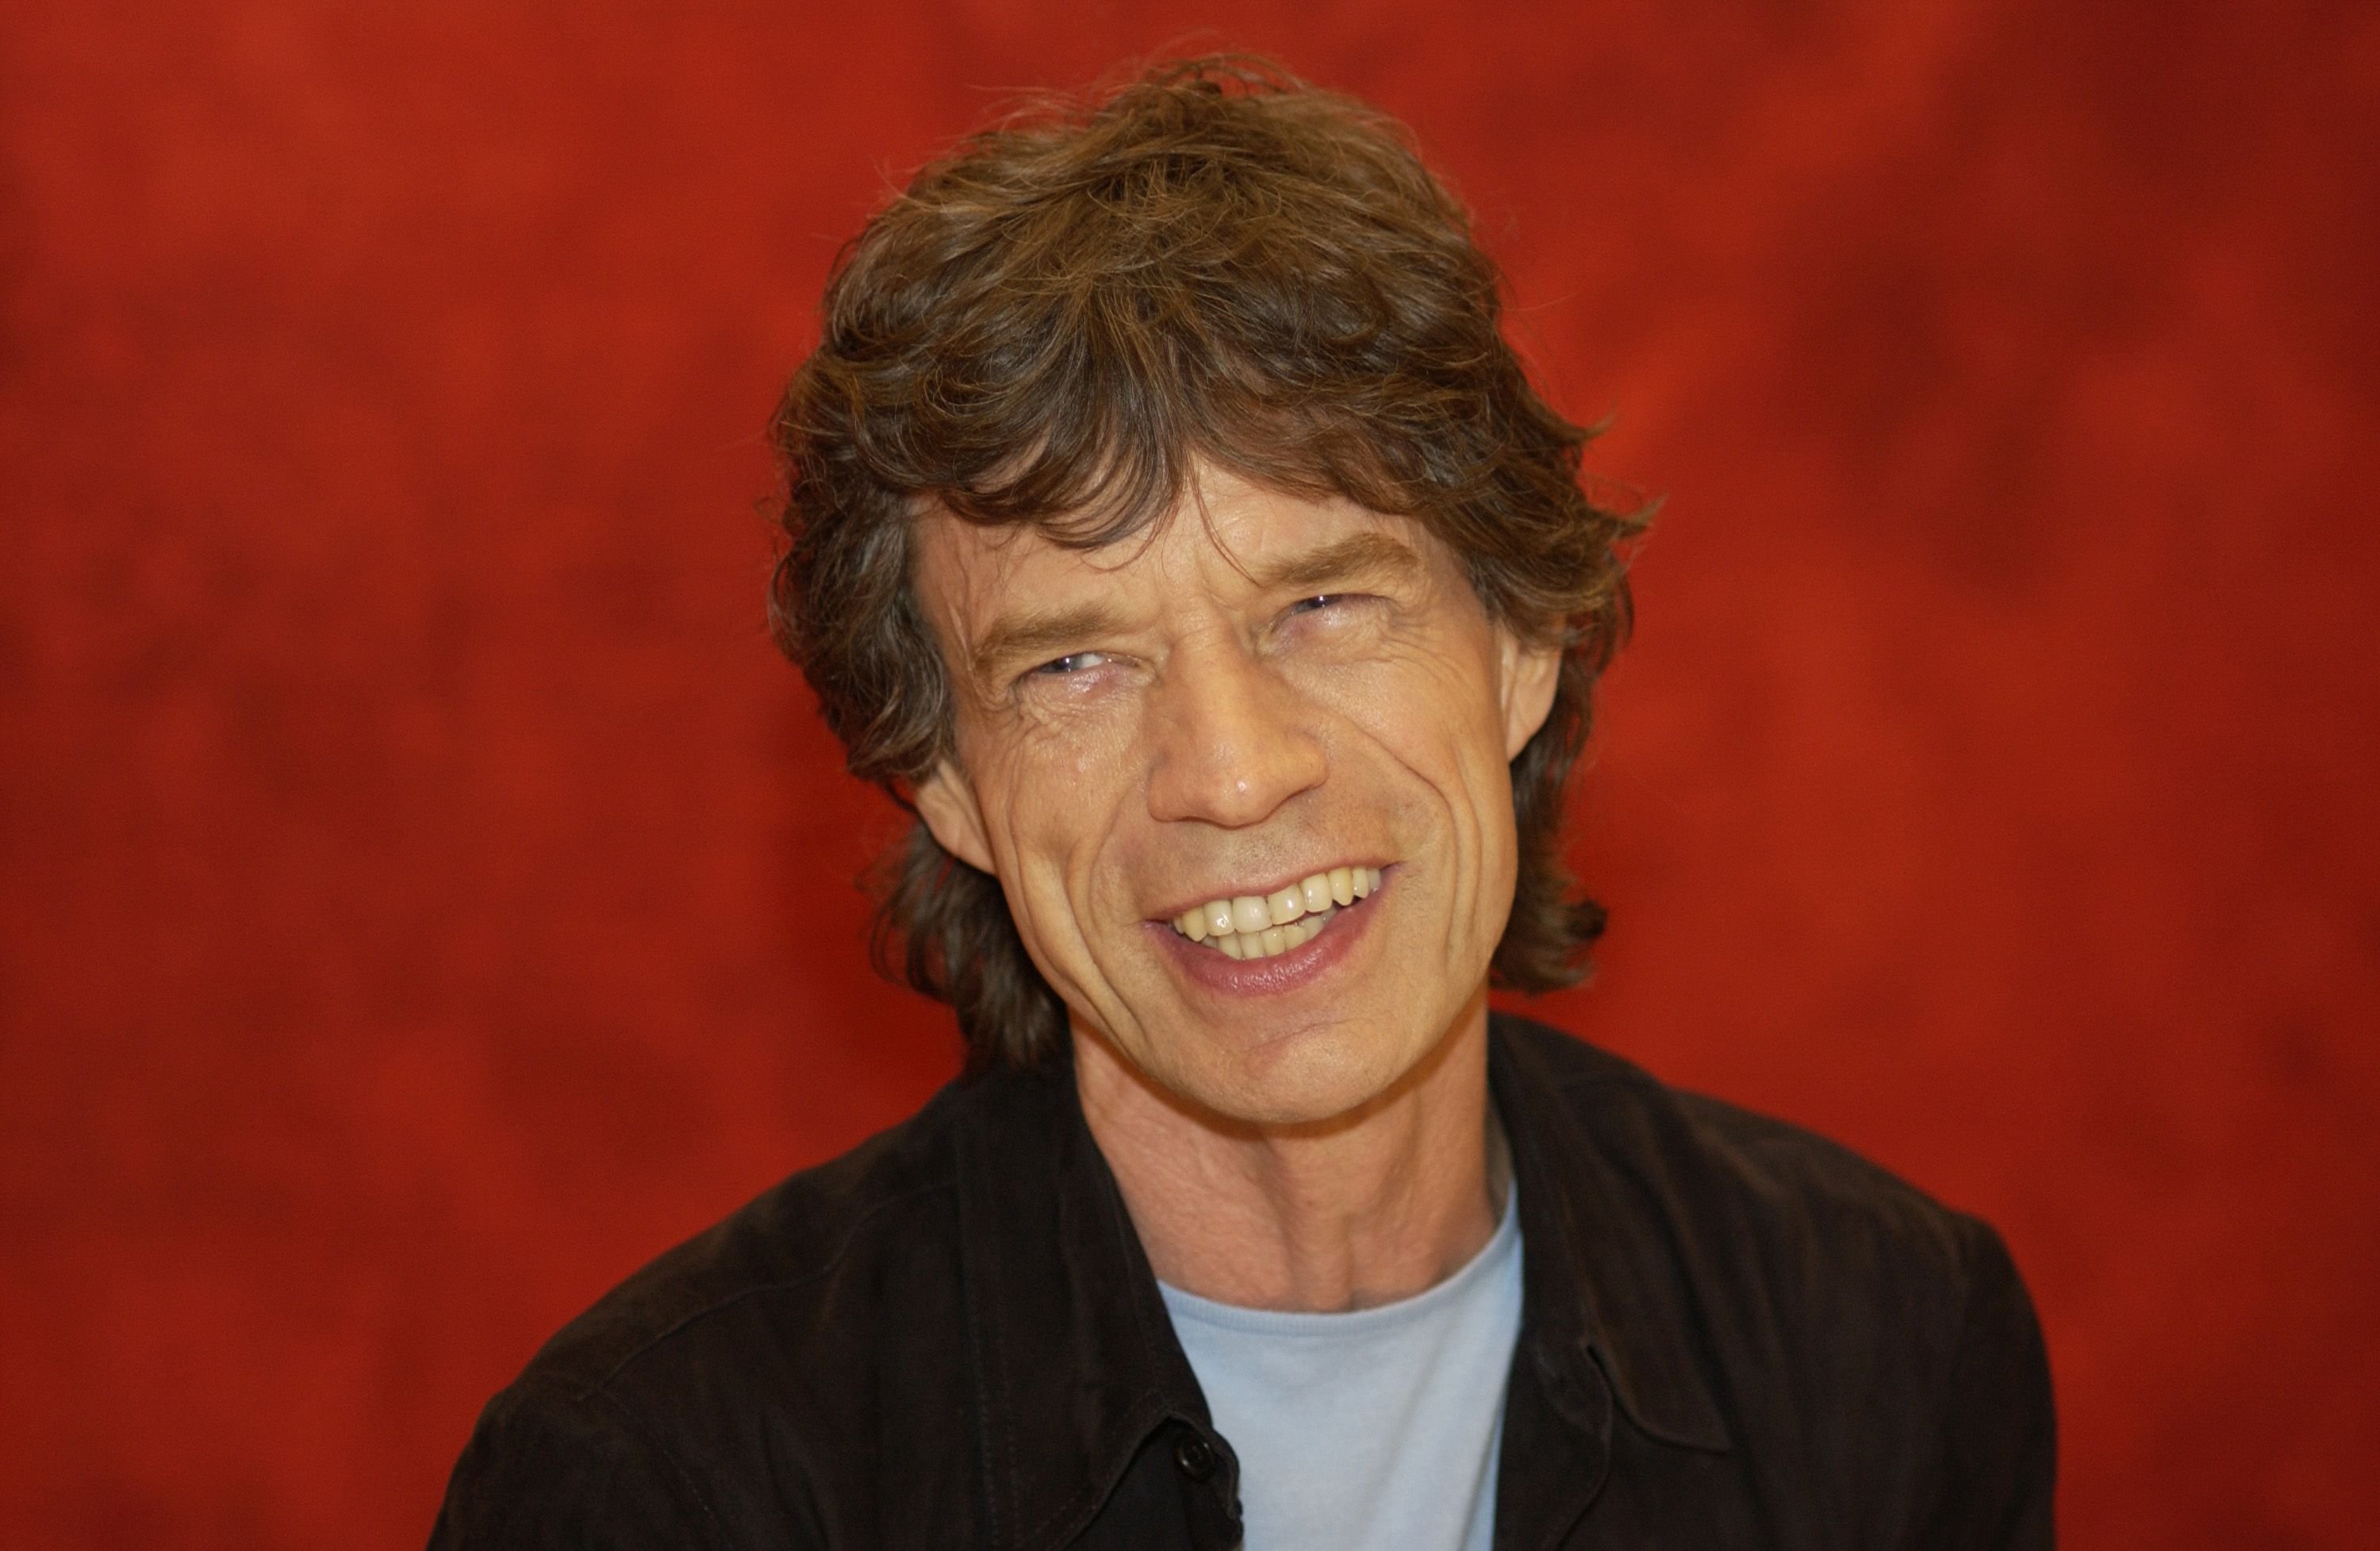 Mick Jagger durante la conferencia de prensa de "The Man from Elysian Fields" en The Four Seasons Hotel en Beverly Hills, California. | Foto: Getty Images